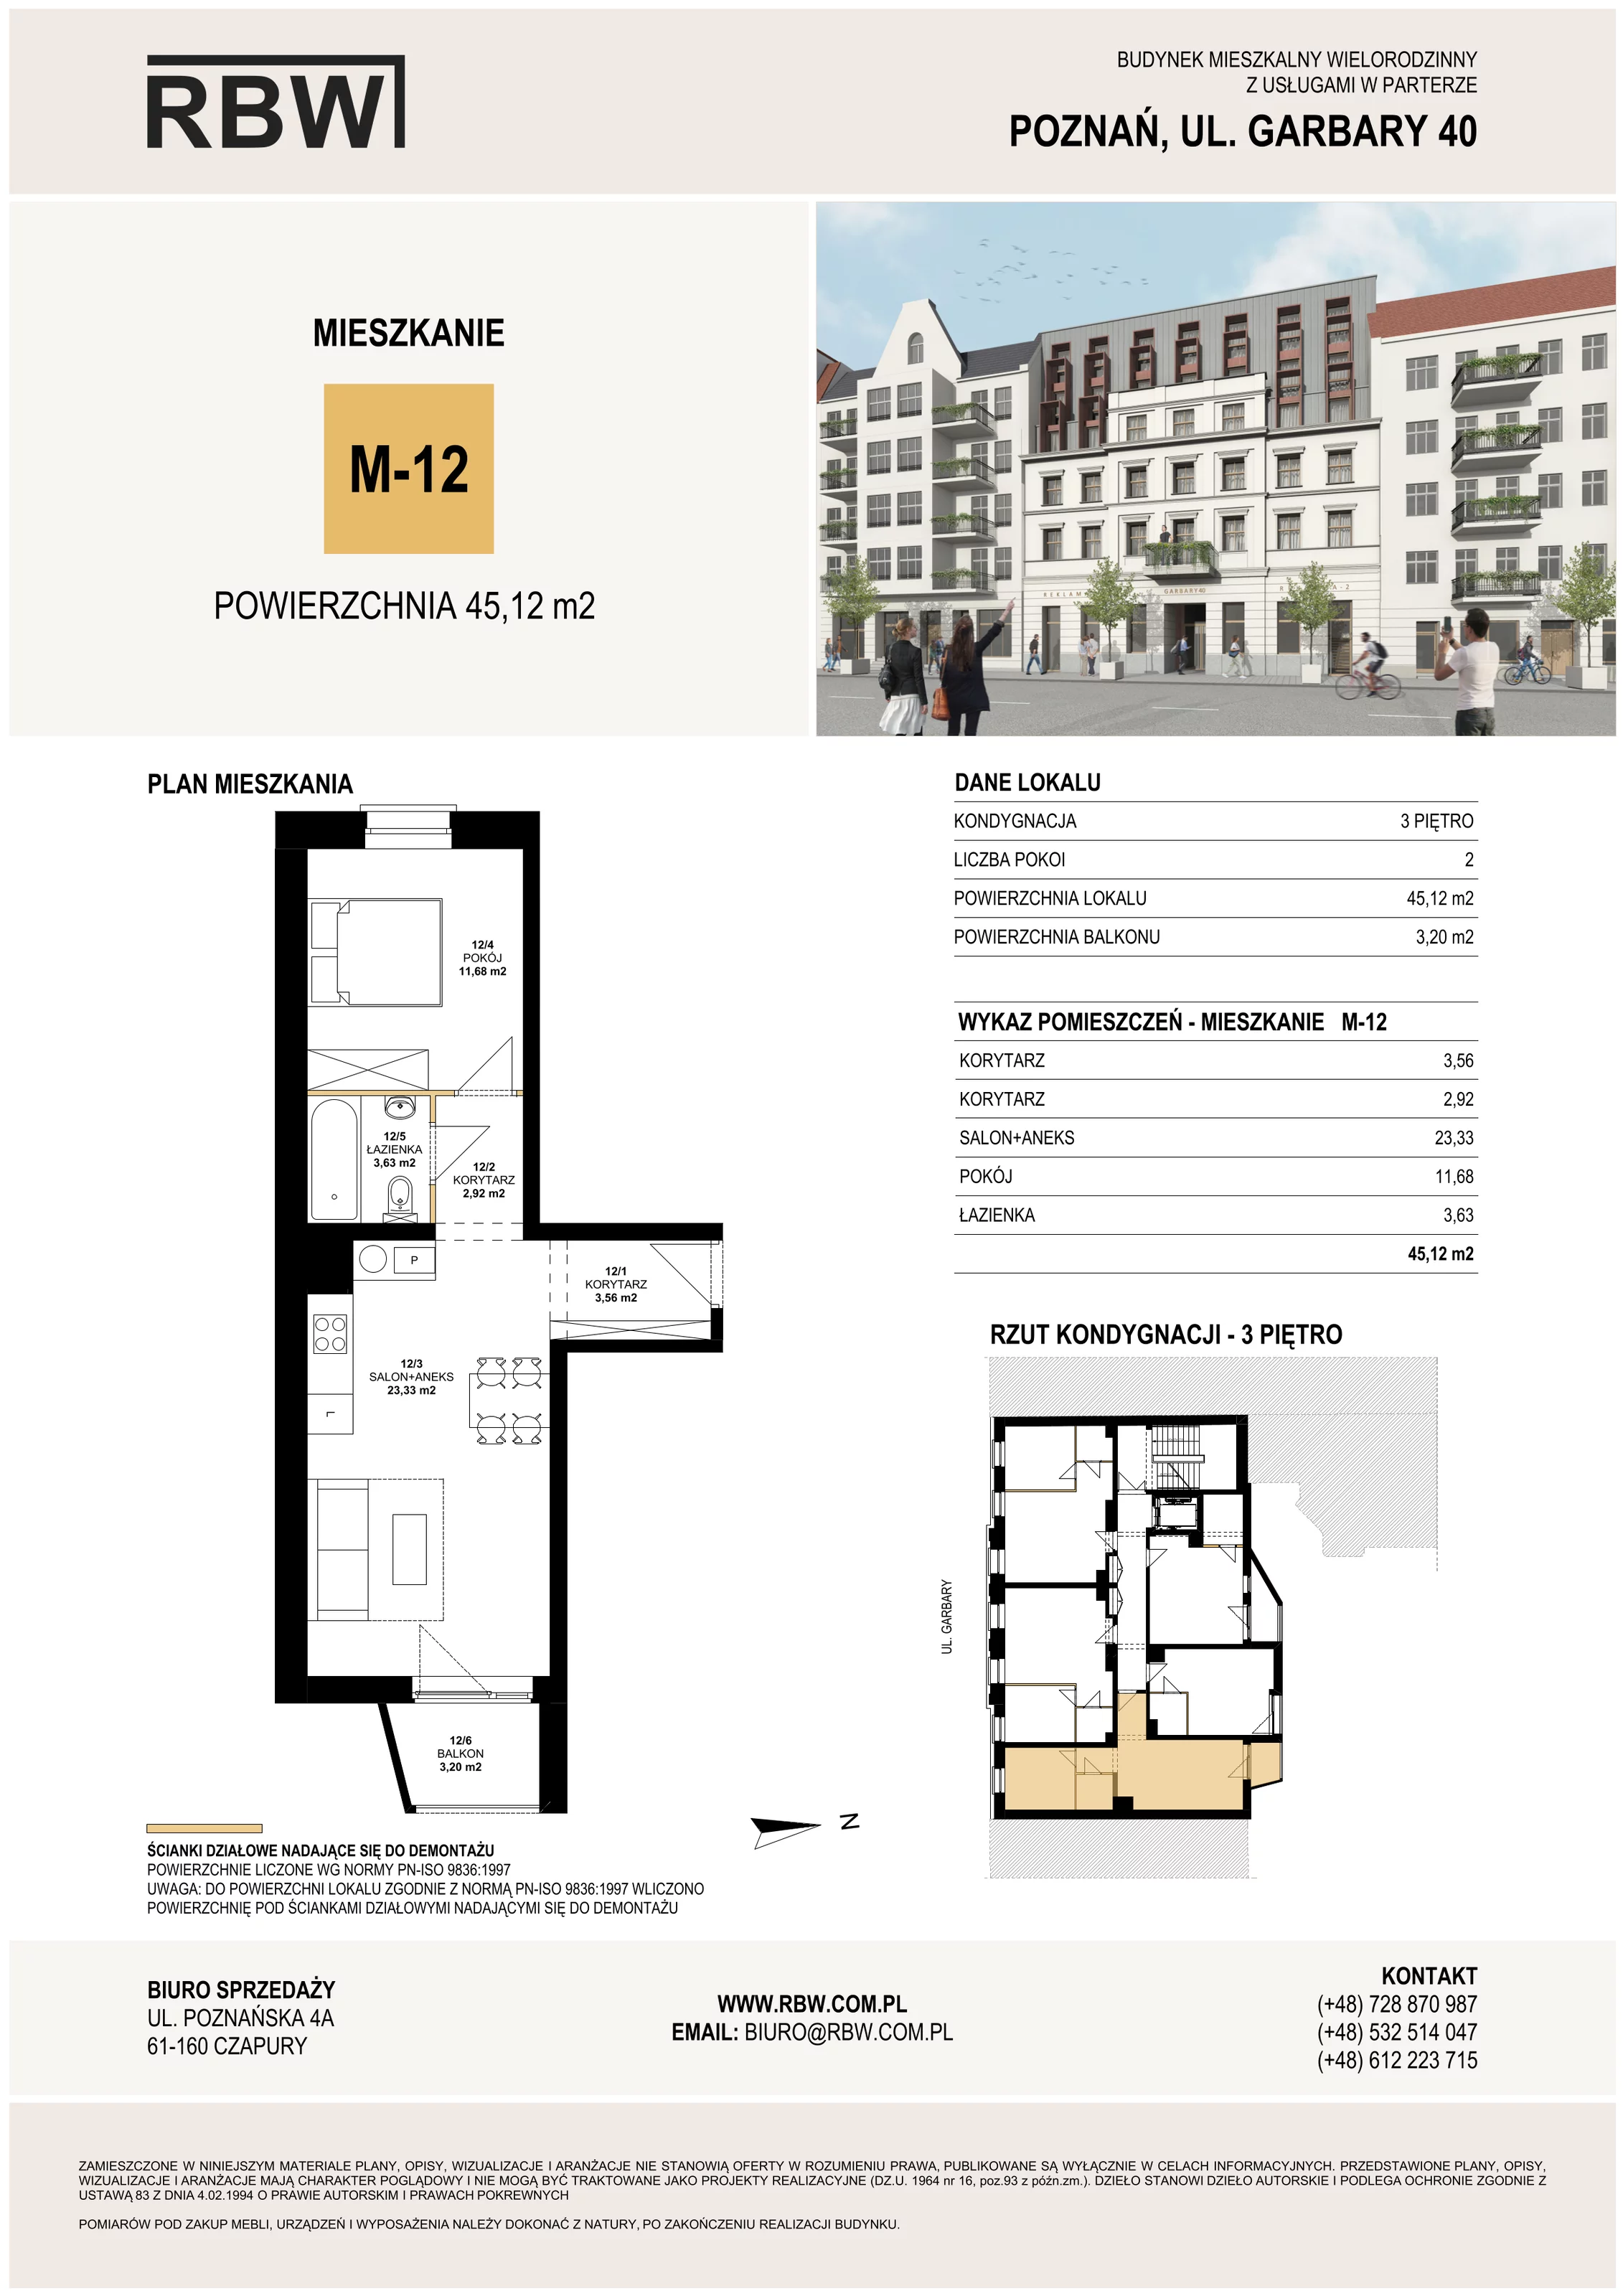 Mieszkanie 45,12 m², piętro 3, oferta nr M12, Garbary 40, Poznań, Stare Miasto, Stare Miasto, ul. Garbary 40